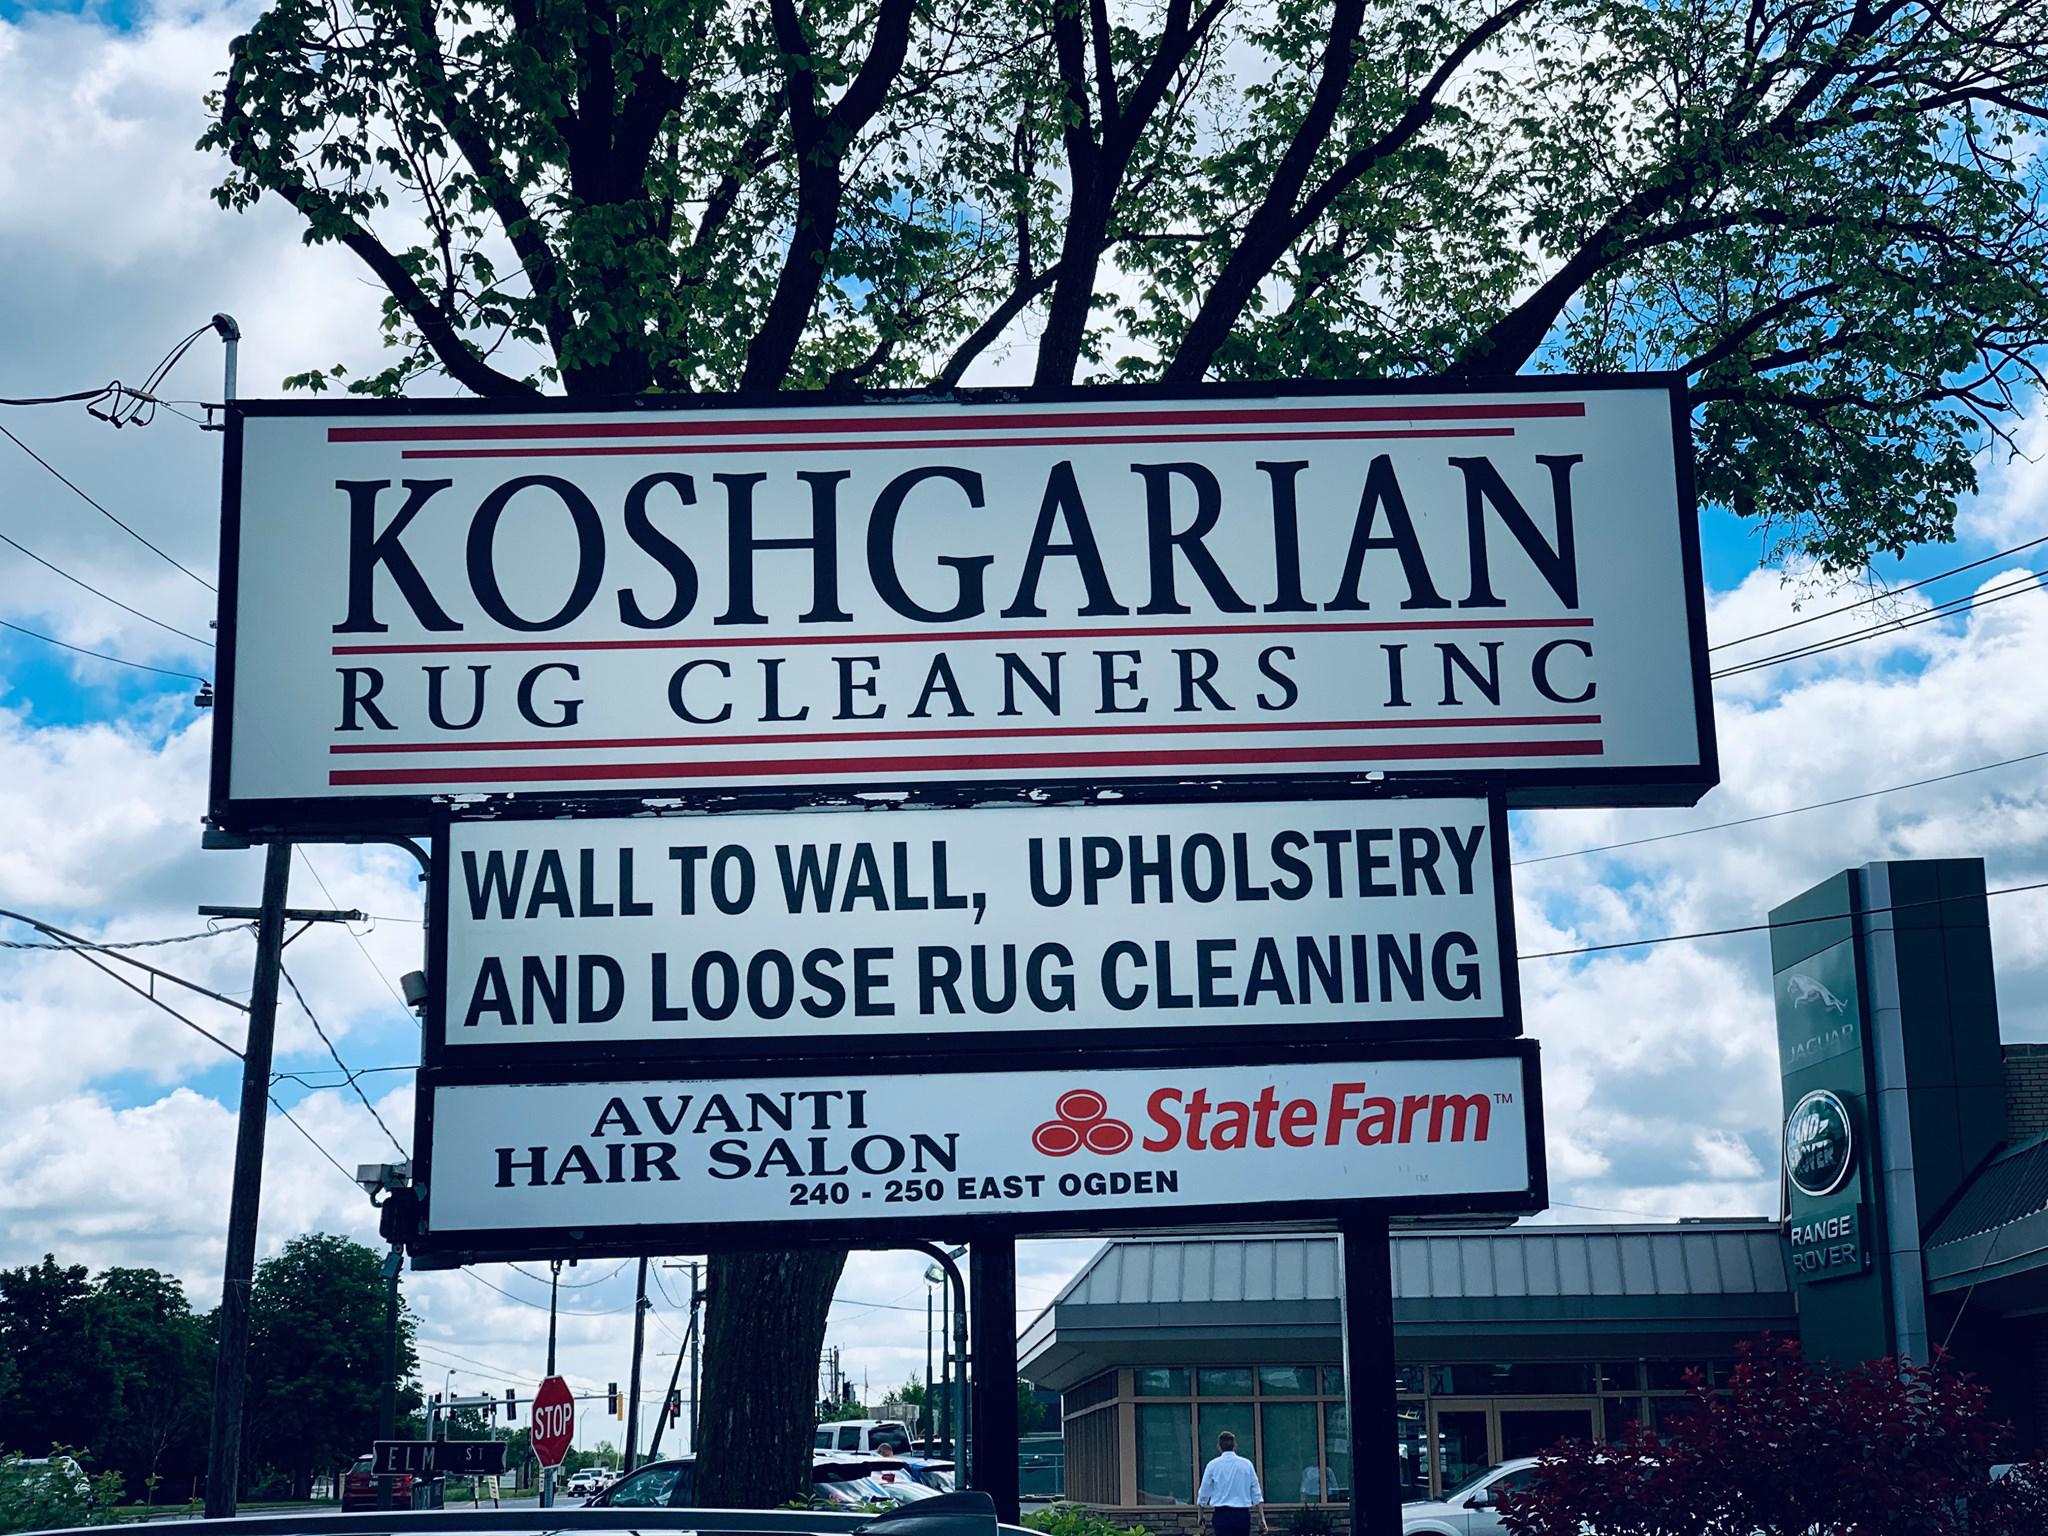 Koshgarian Rug Cleaners, Inc. Photo